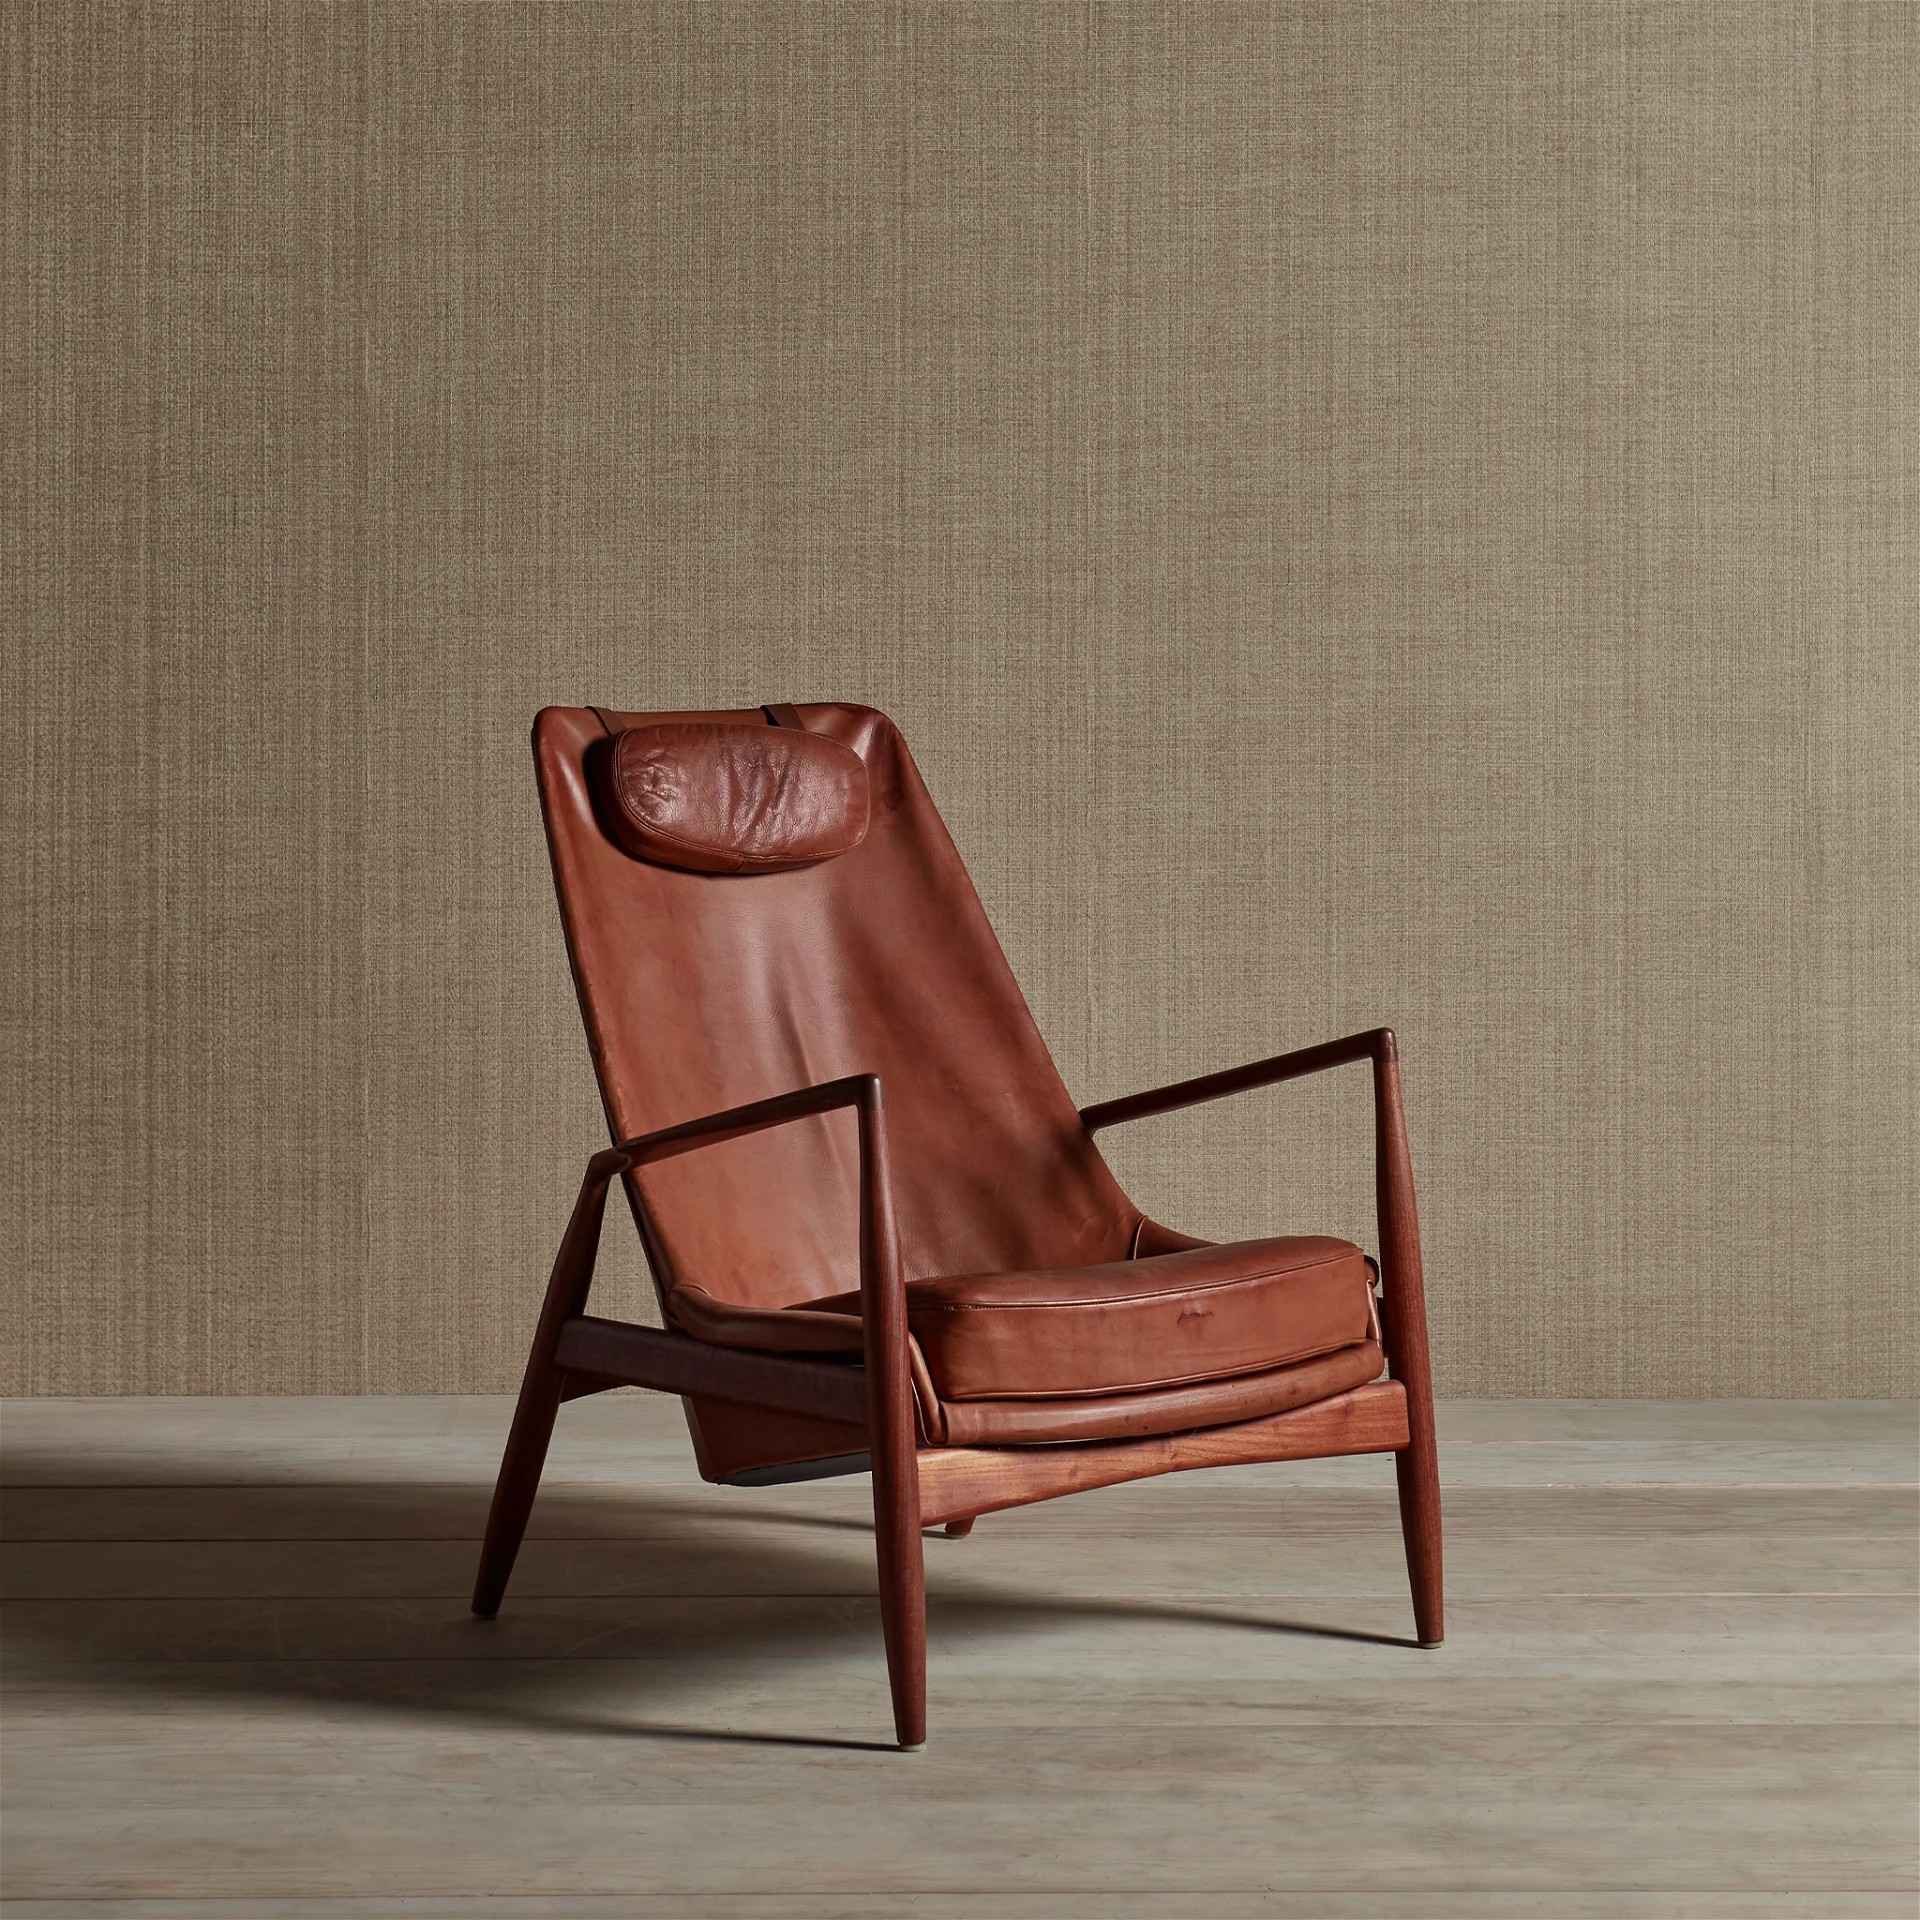 The image of an Ib Kofod Larsen Sälen Chair product